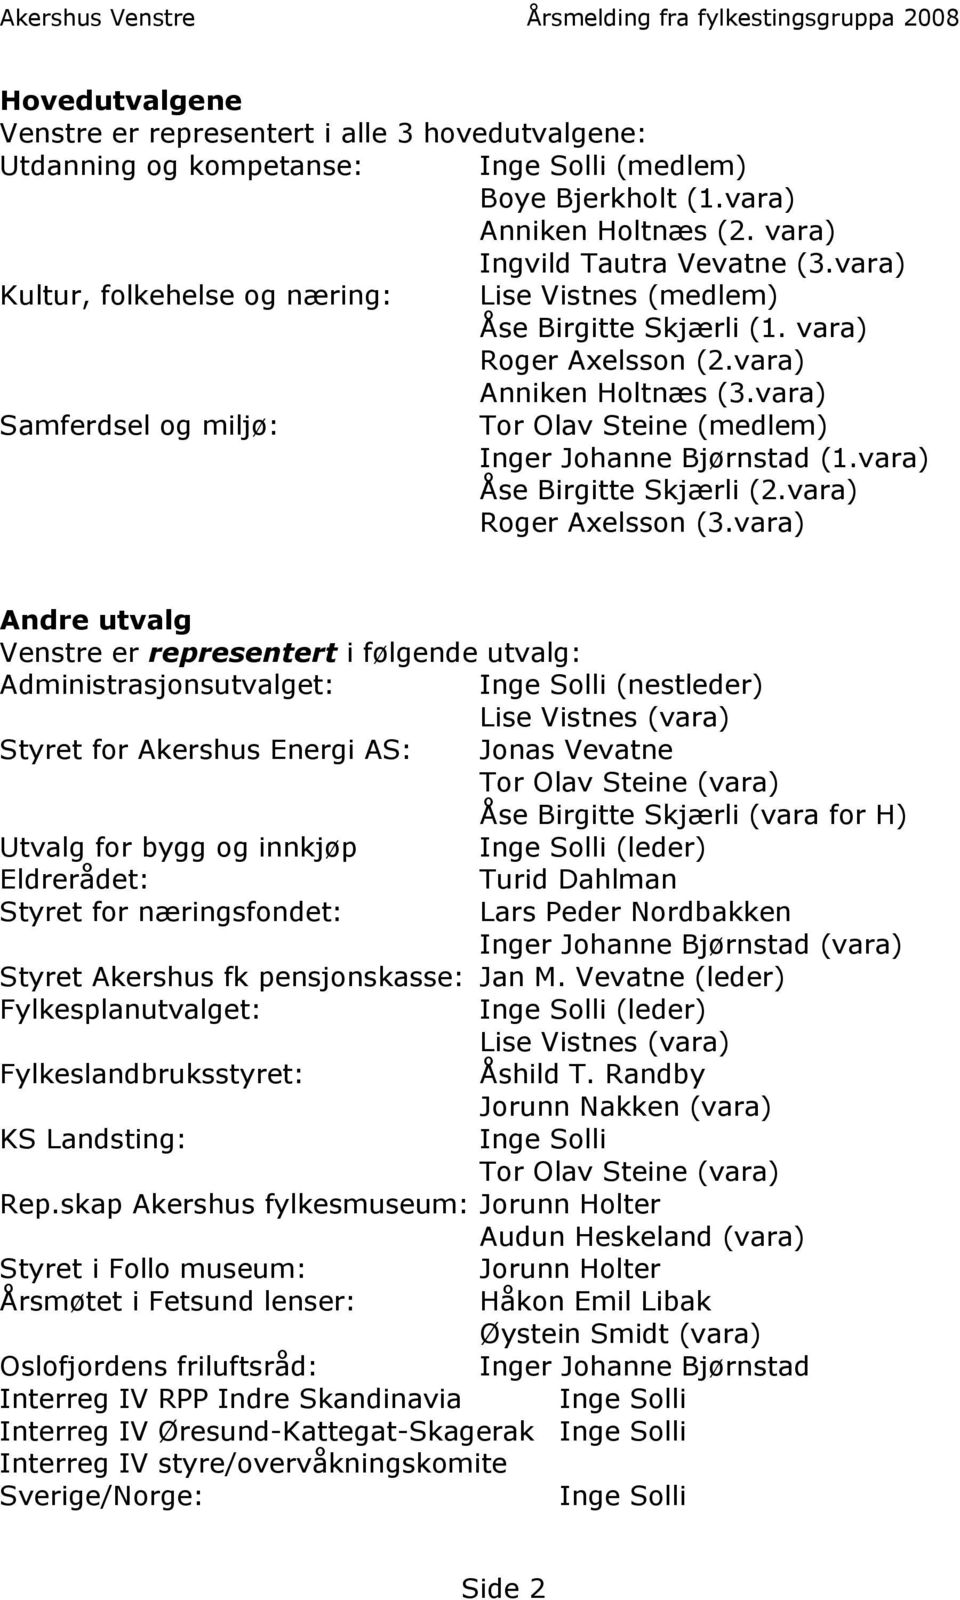 vara) Samferdsel og miljø: Tor Olav Steine (medlem) Inger Johanne Bjørnstad (1.vara) Åse Birgitte Skjærli (2.vara) Roger Axelsson (3.